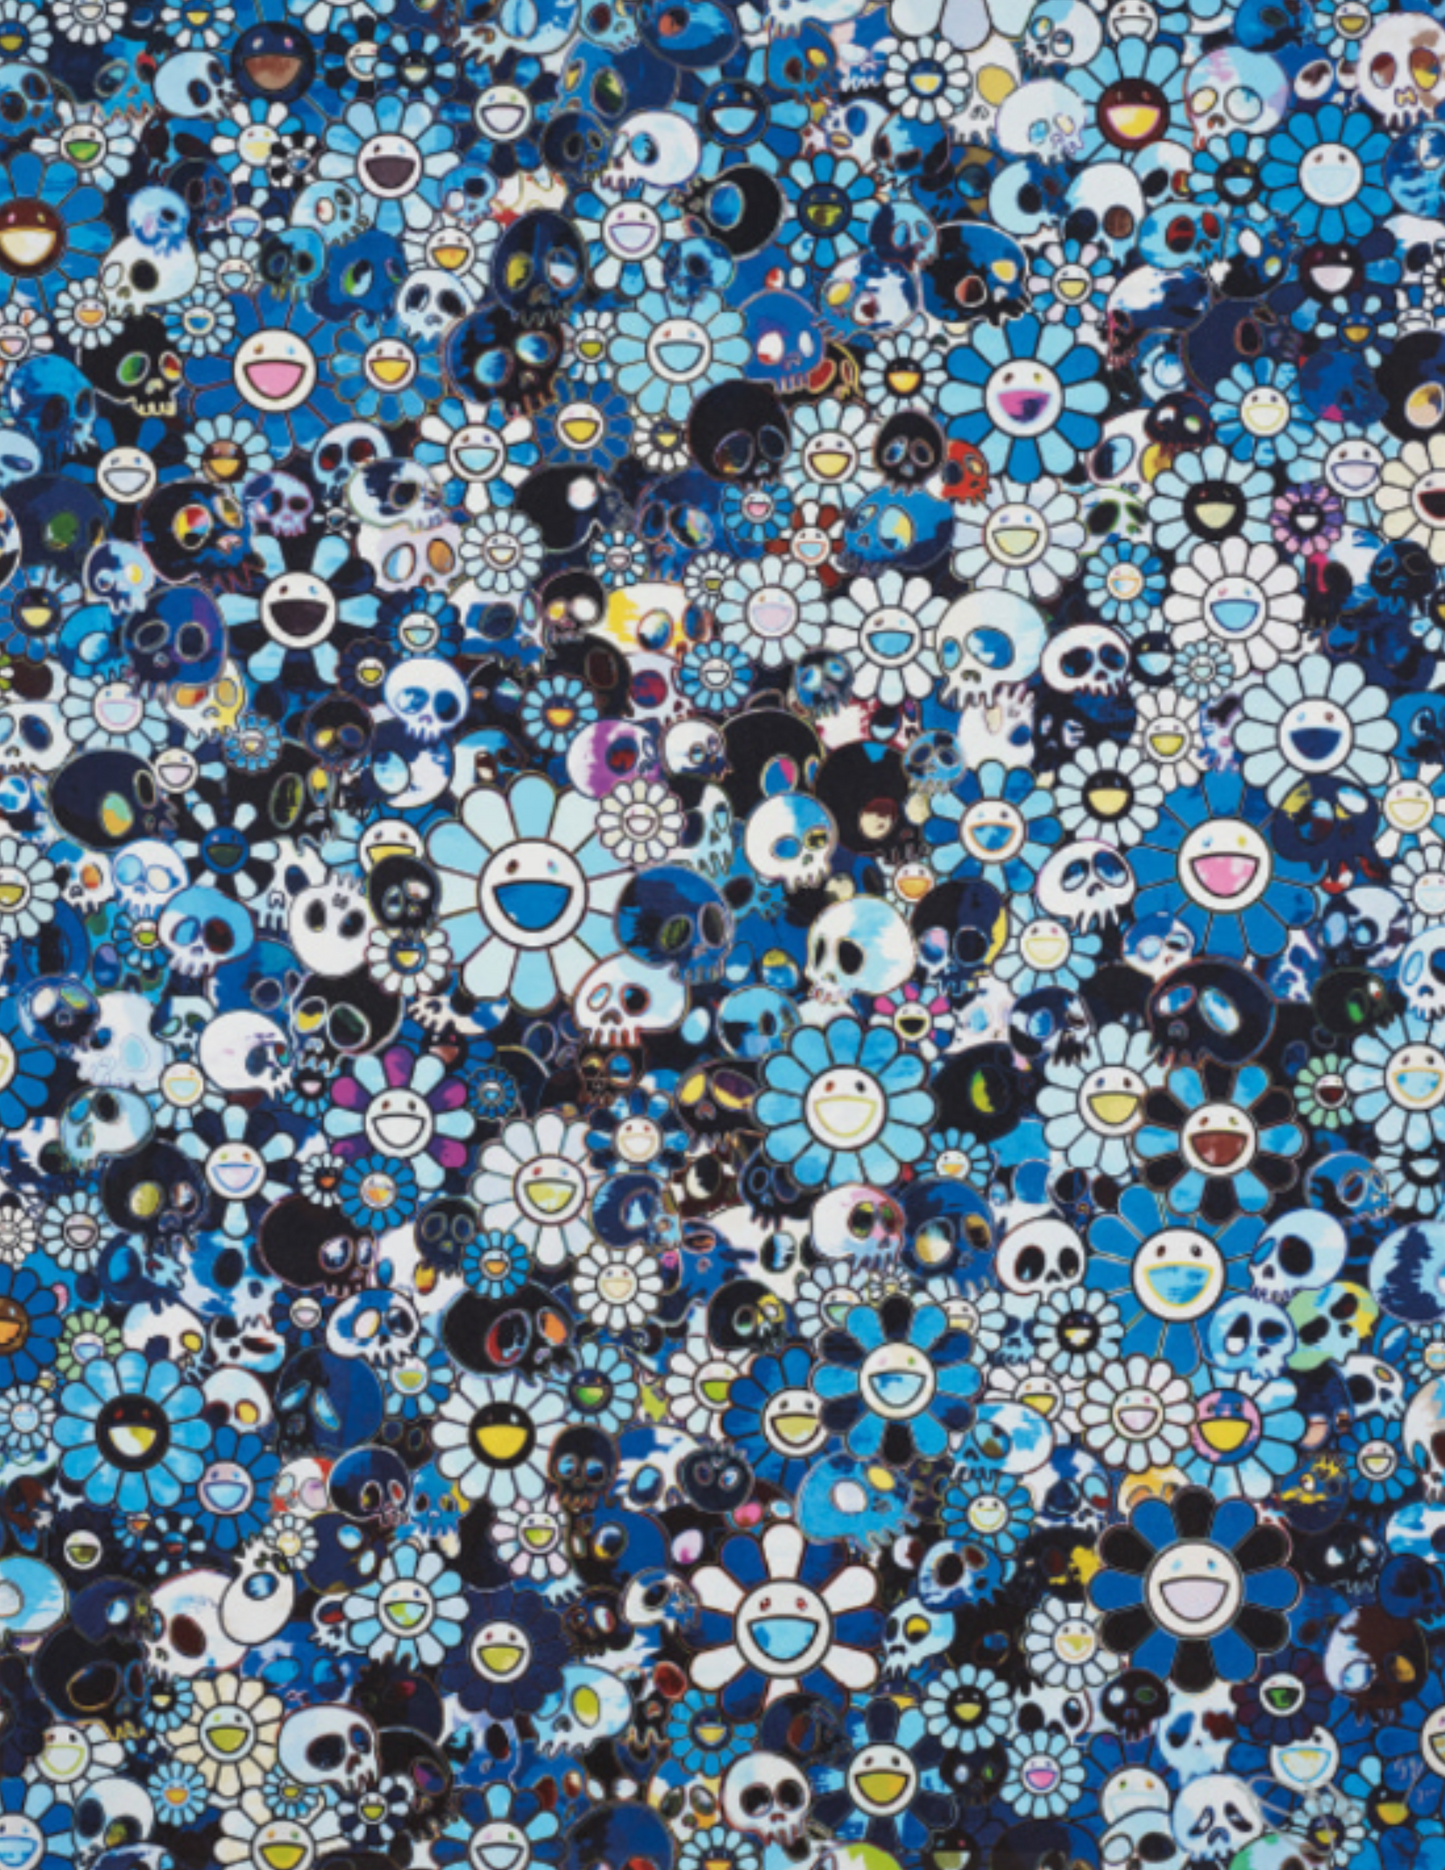 Takashi Murakami - "Blue Flowers and Skulls" Edition Print